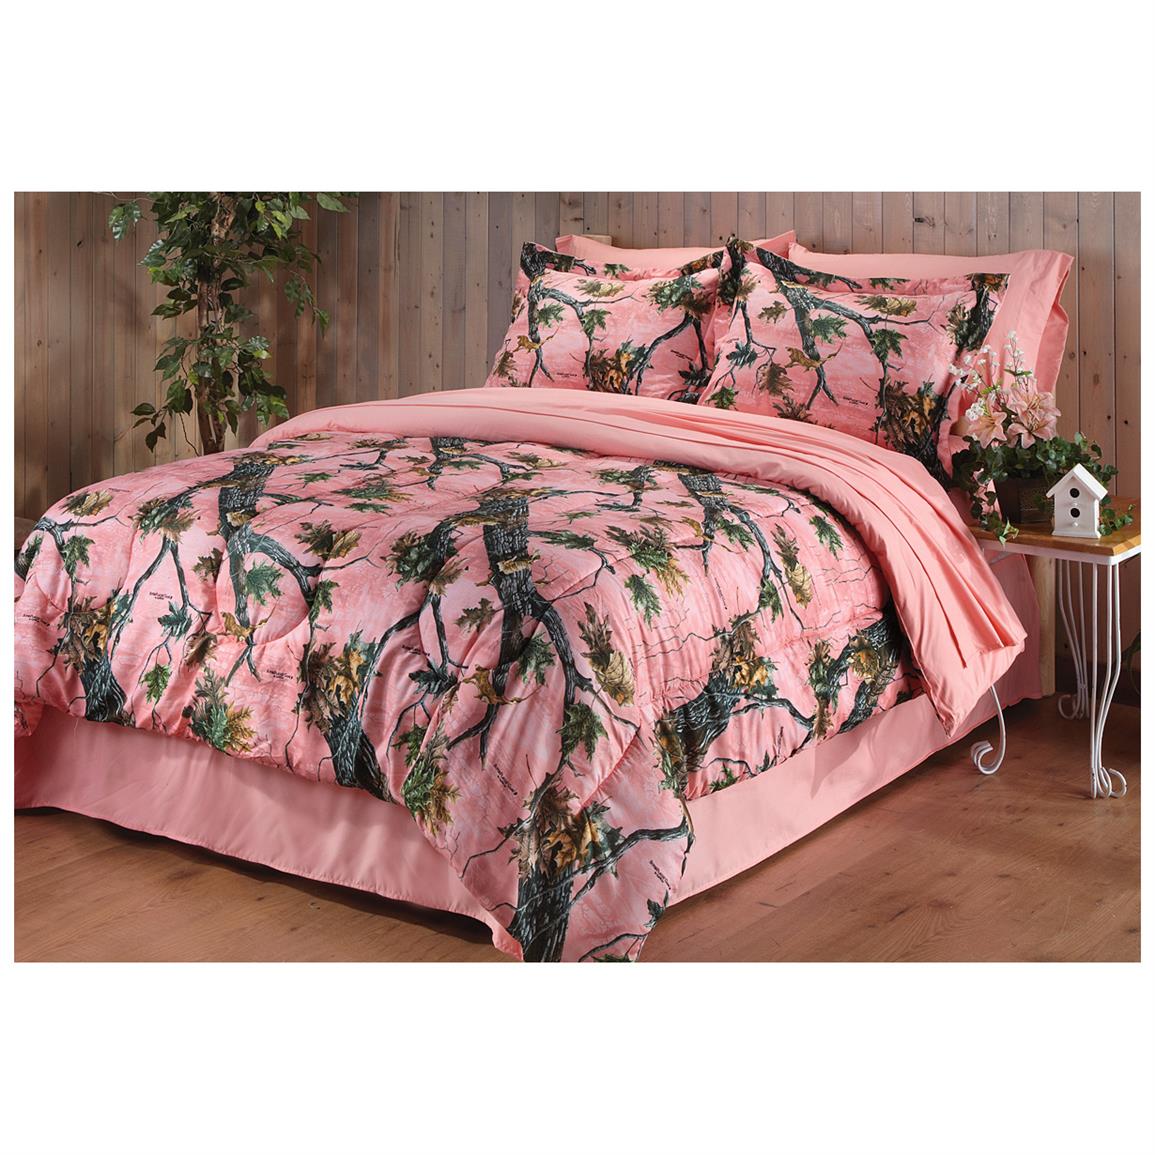 Superflauge Pink Complete Bed Set, Pink Camo Twin Bed Set